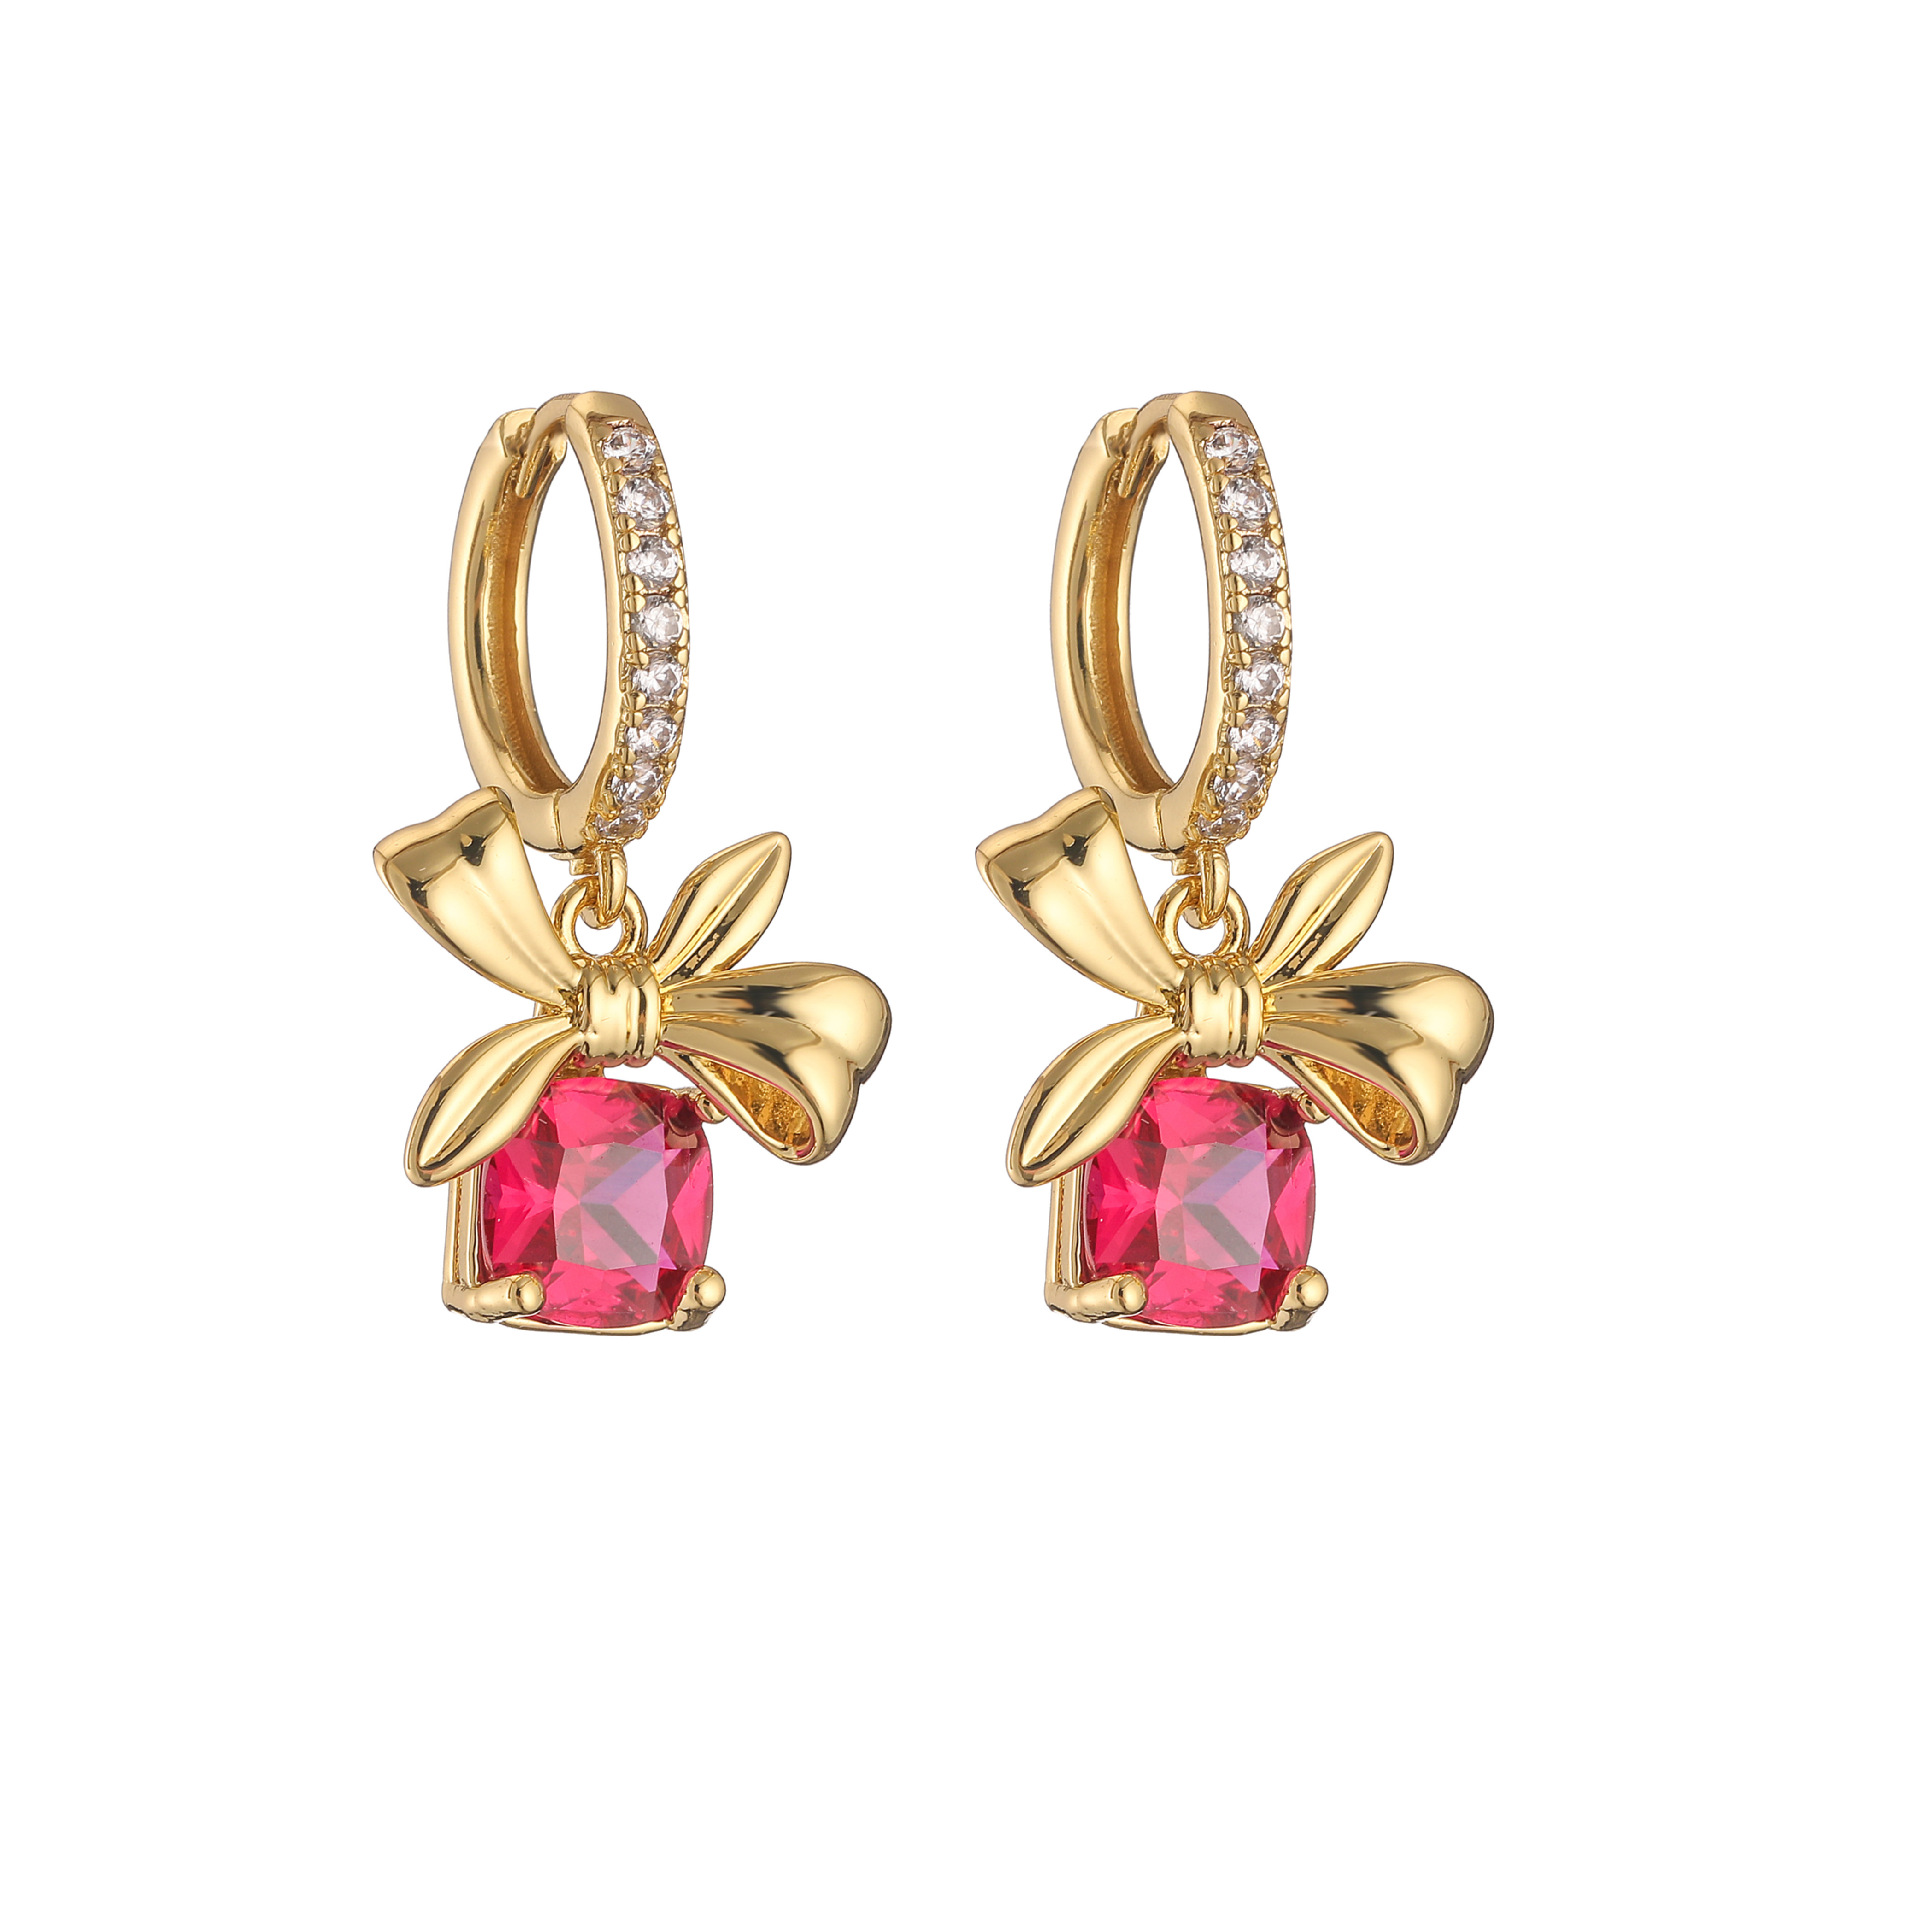 5:Rose earrings